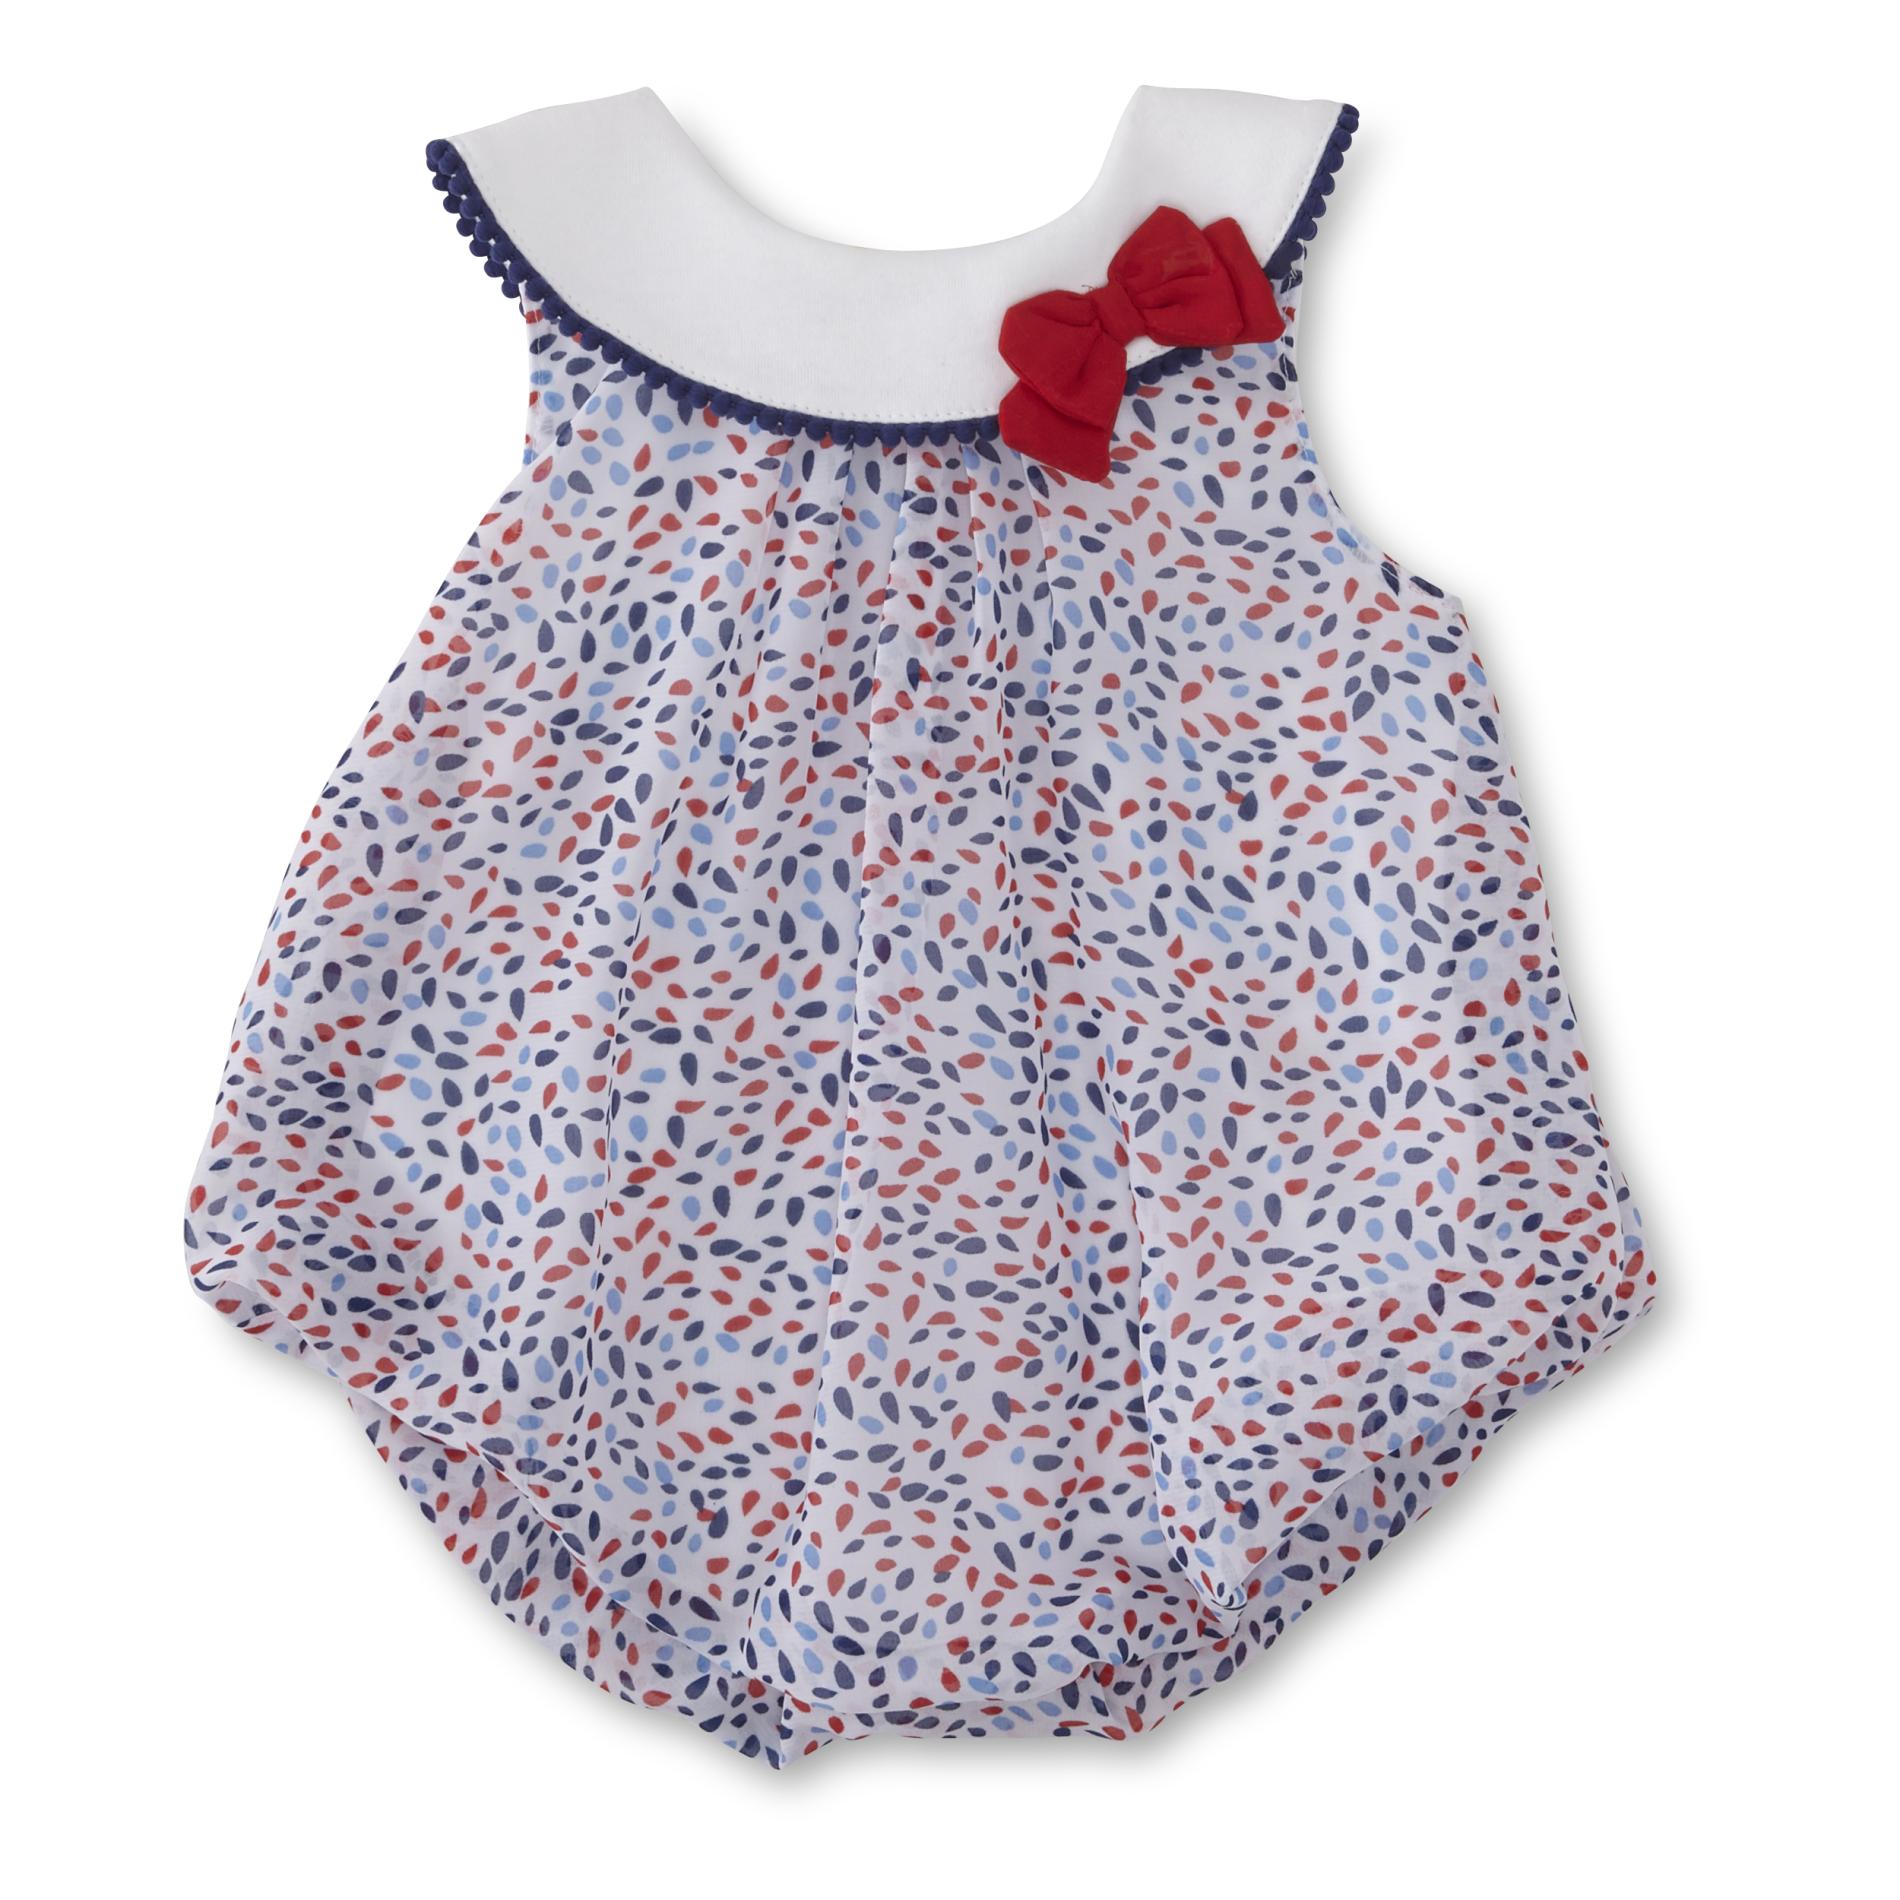 Baby Essentials Infant Girls' Bubble Romper - Nautical/Dots